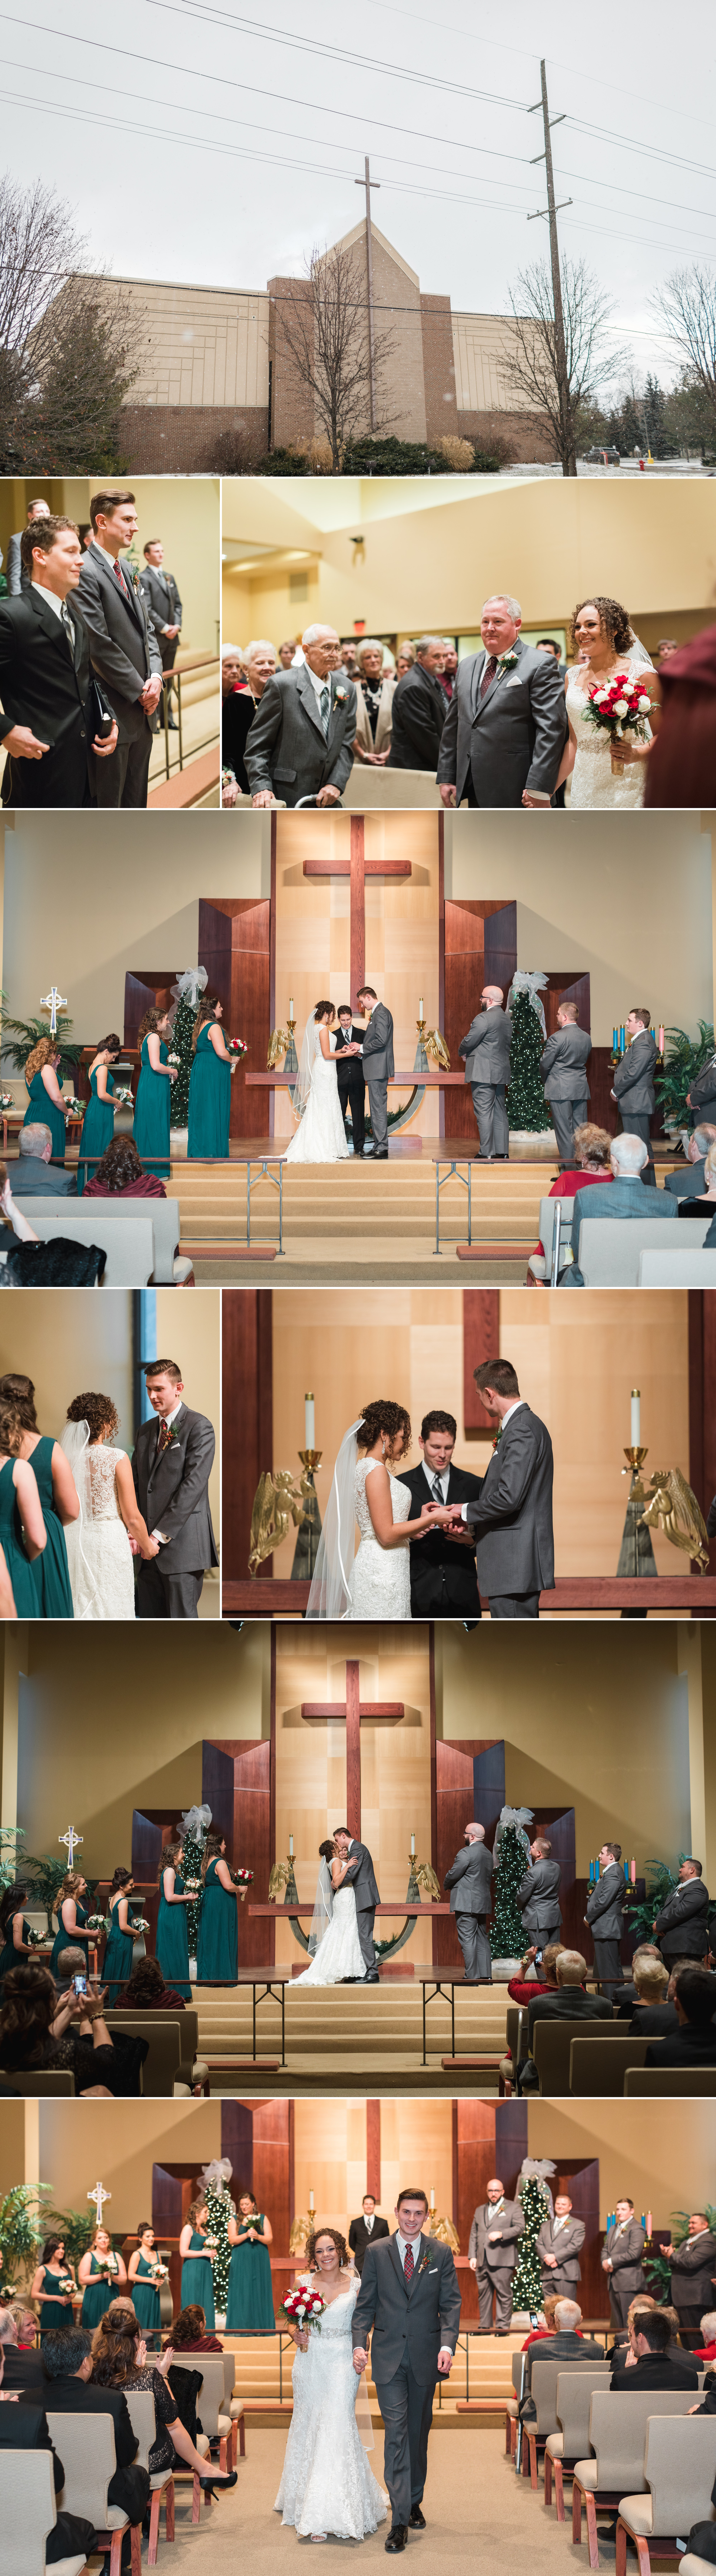 Italian American Club Wedding ceremony taking place inside Risen Christ Lutheran Church